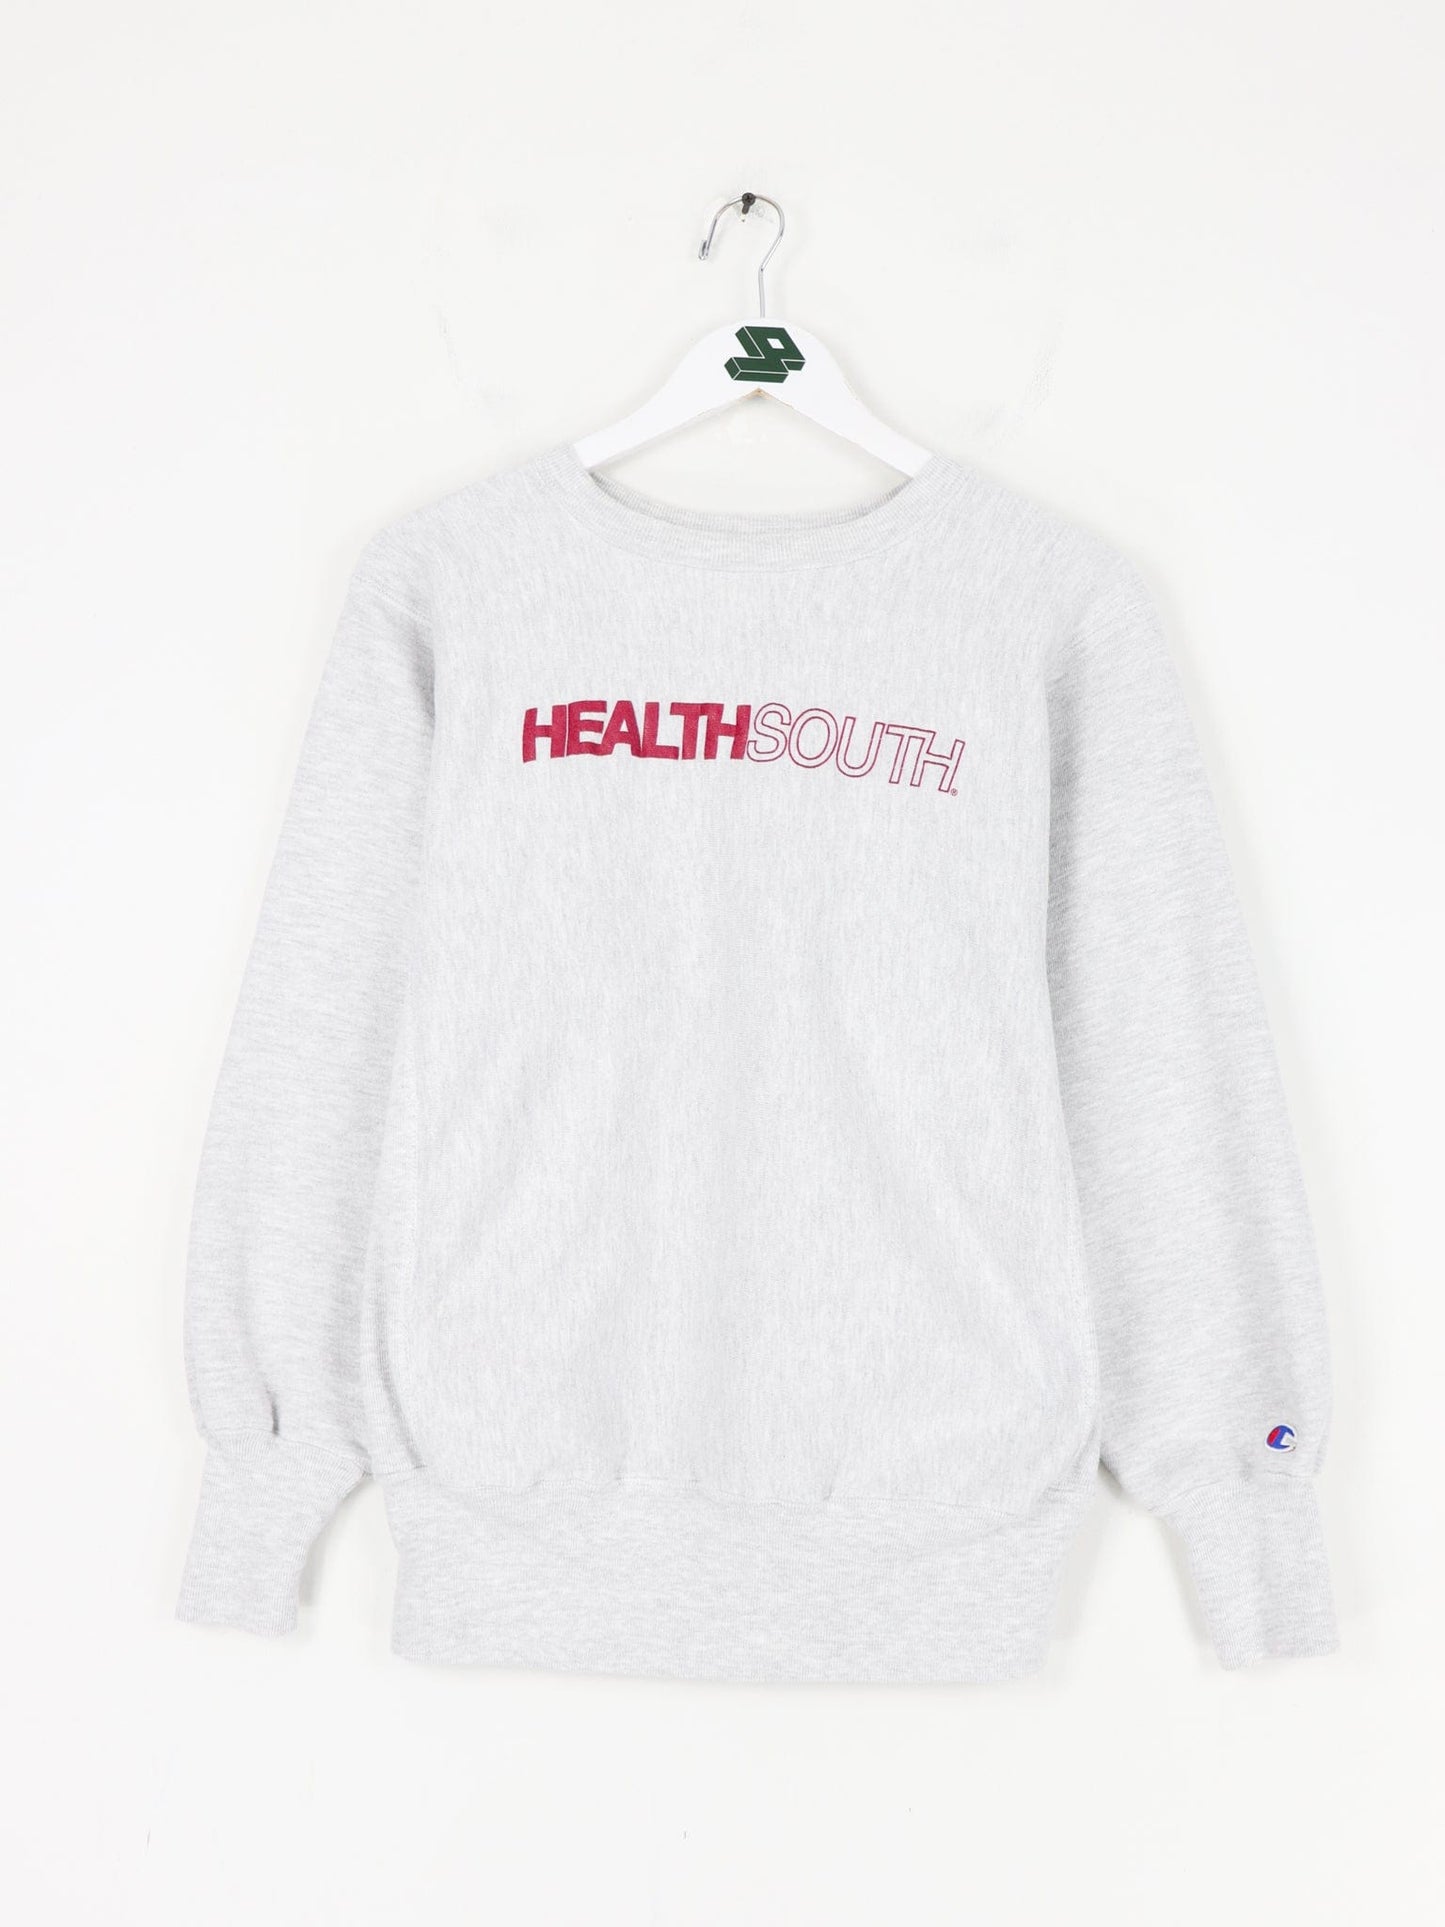 Champion Sweatshirts & Hoodies Vintage Health South Champion Reverse Weave Sweatshirt Size Medium Fits Small